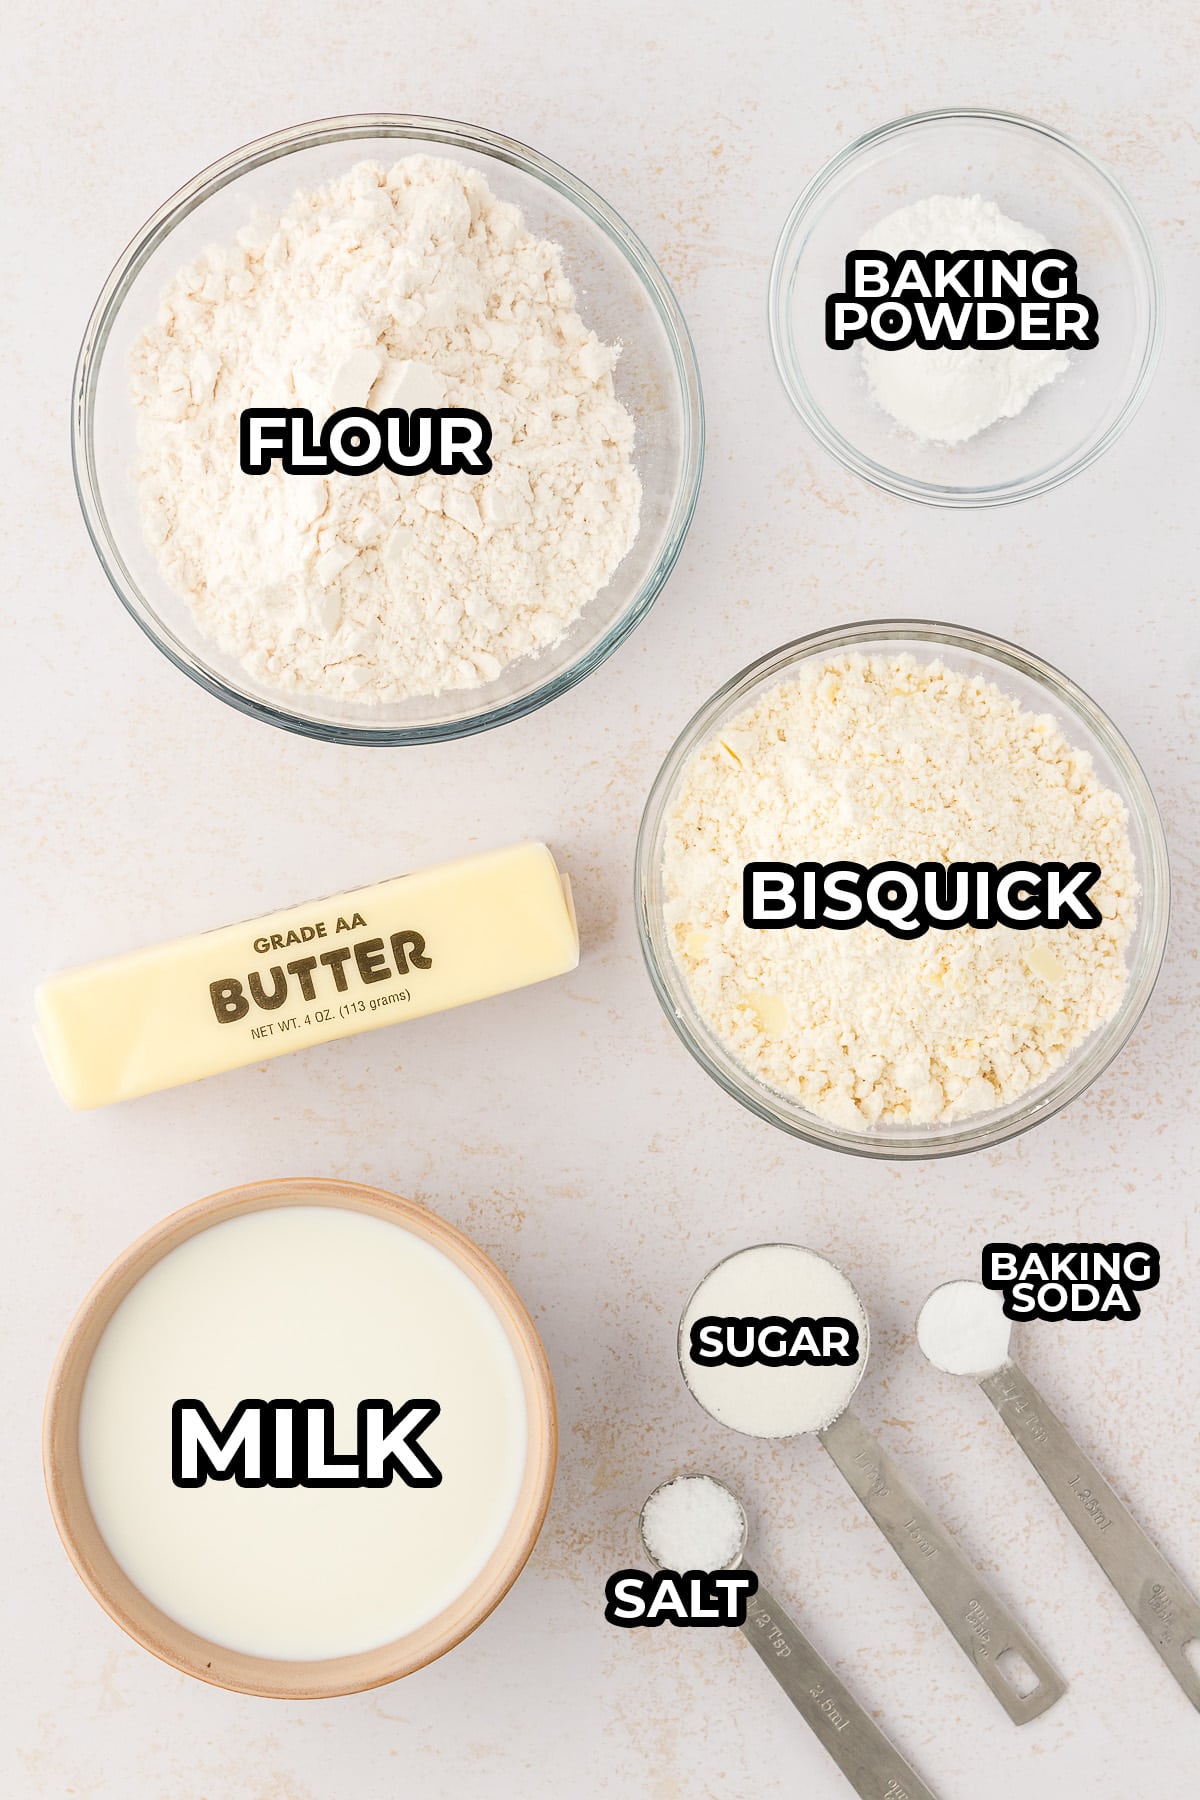 Ingredients for bisquick biscuits.